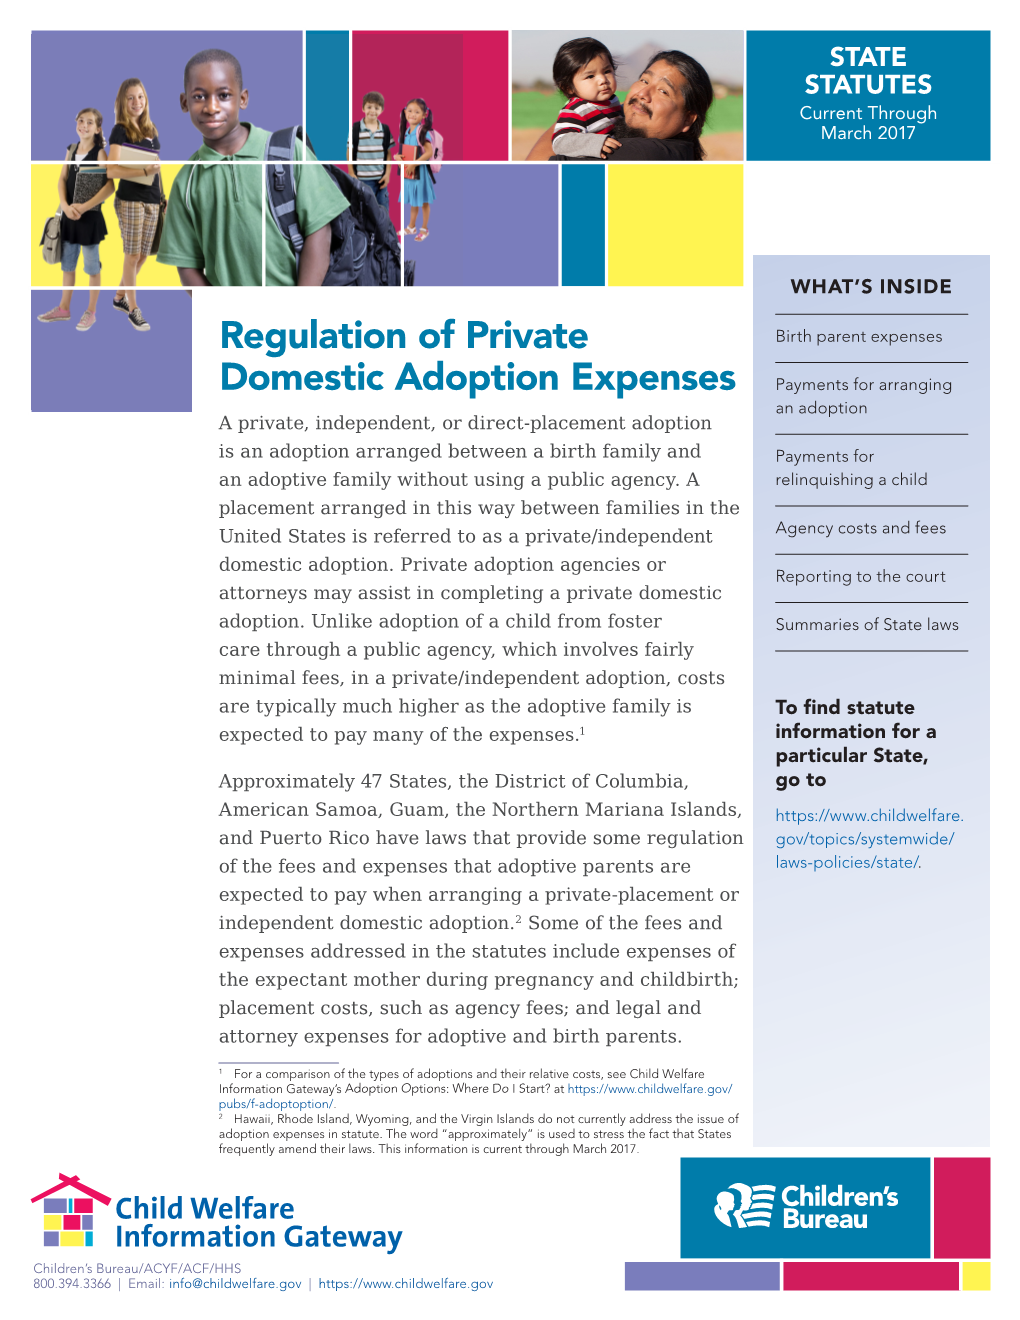 Regulation of Private Domestic Adoption Expenses